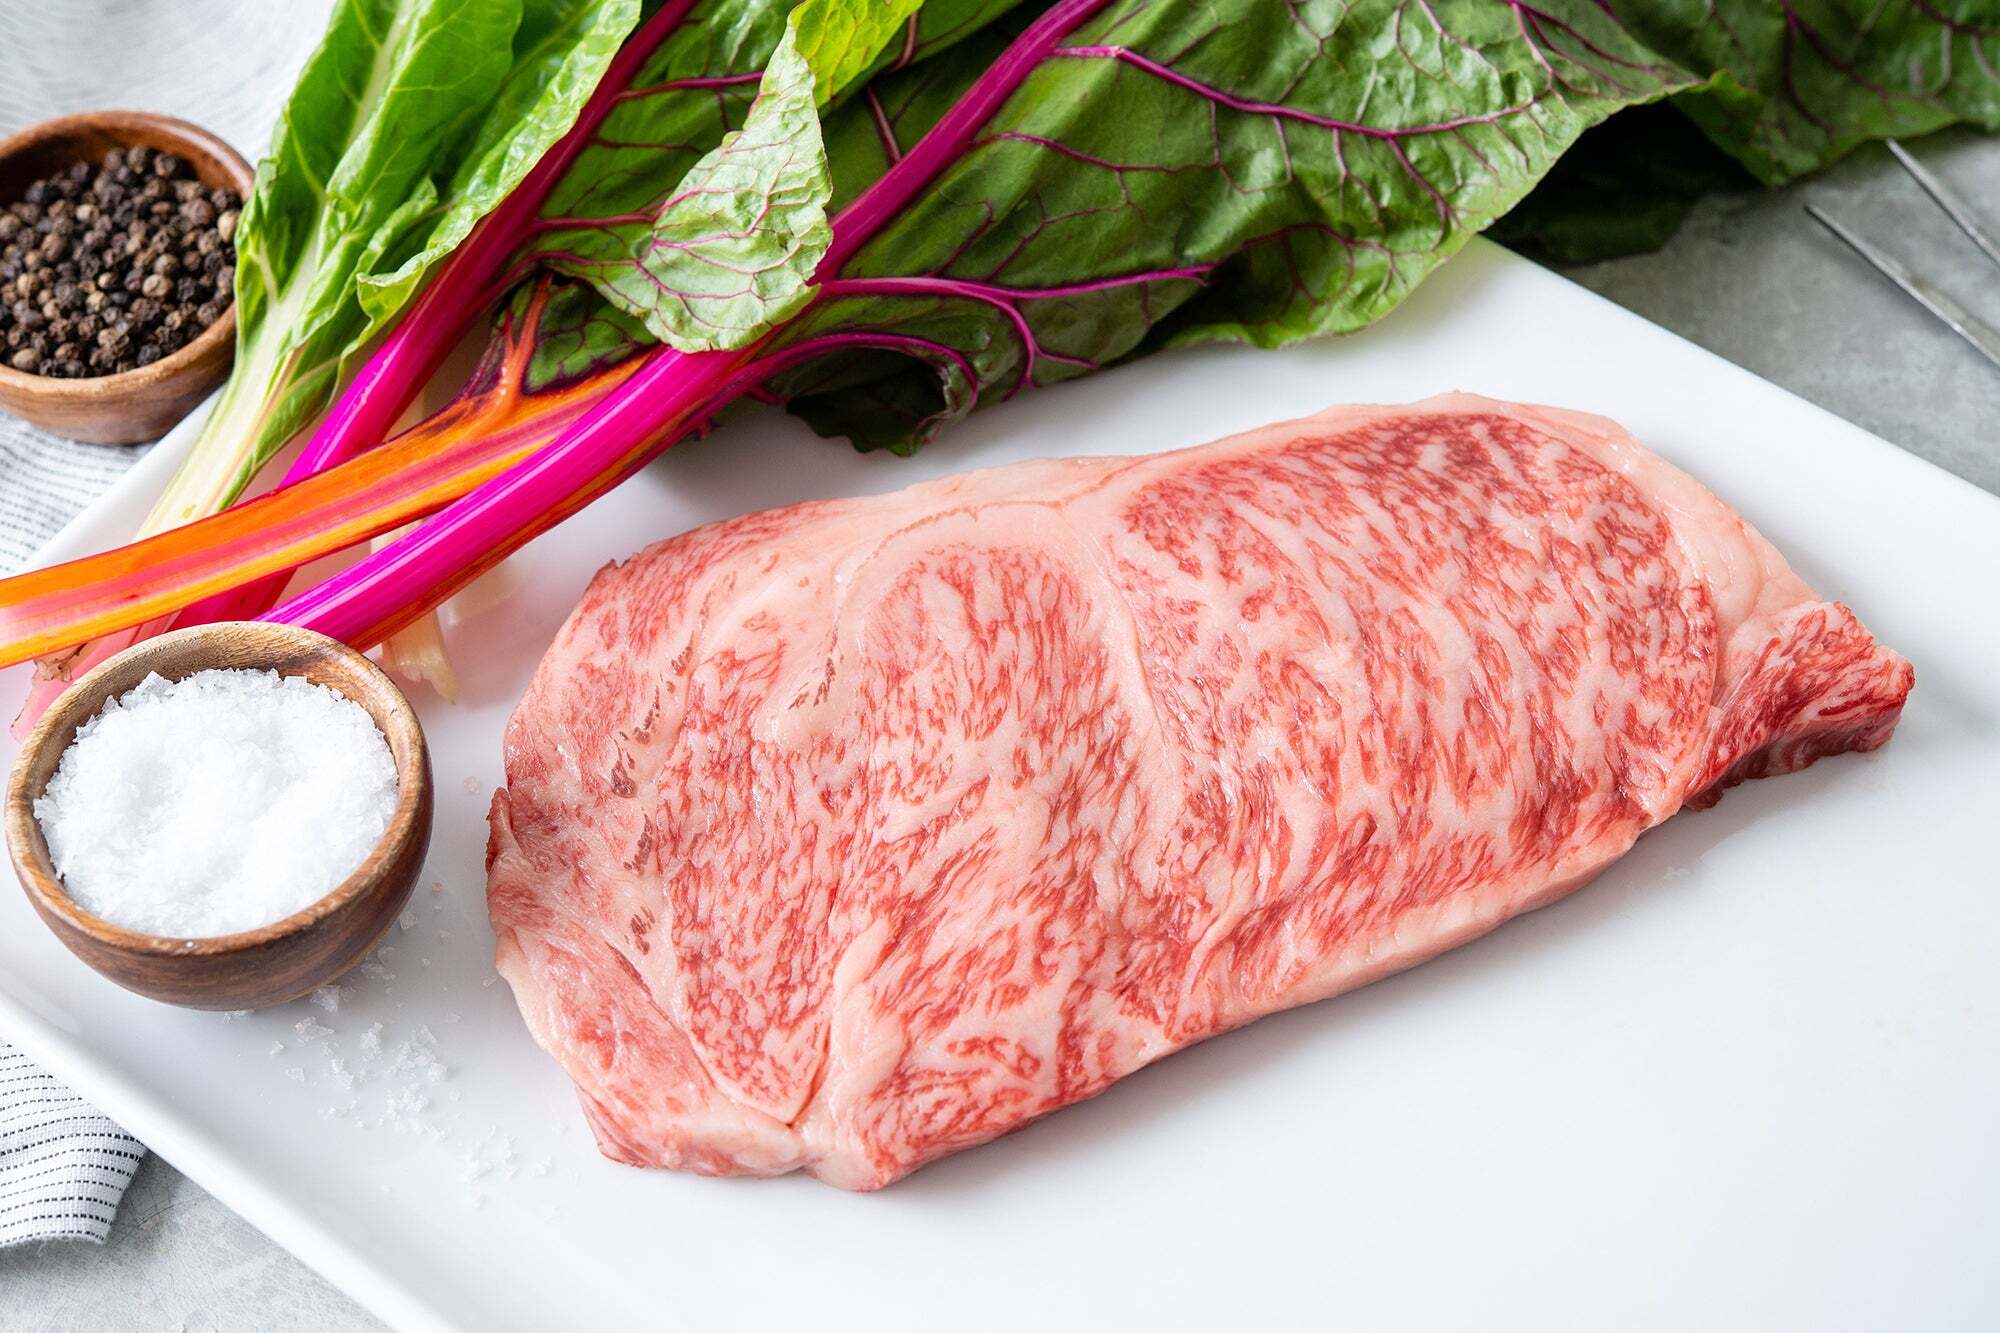 FROZEN wagyu full set HACCP Meat Beef